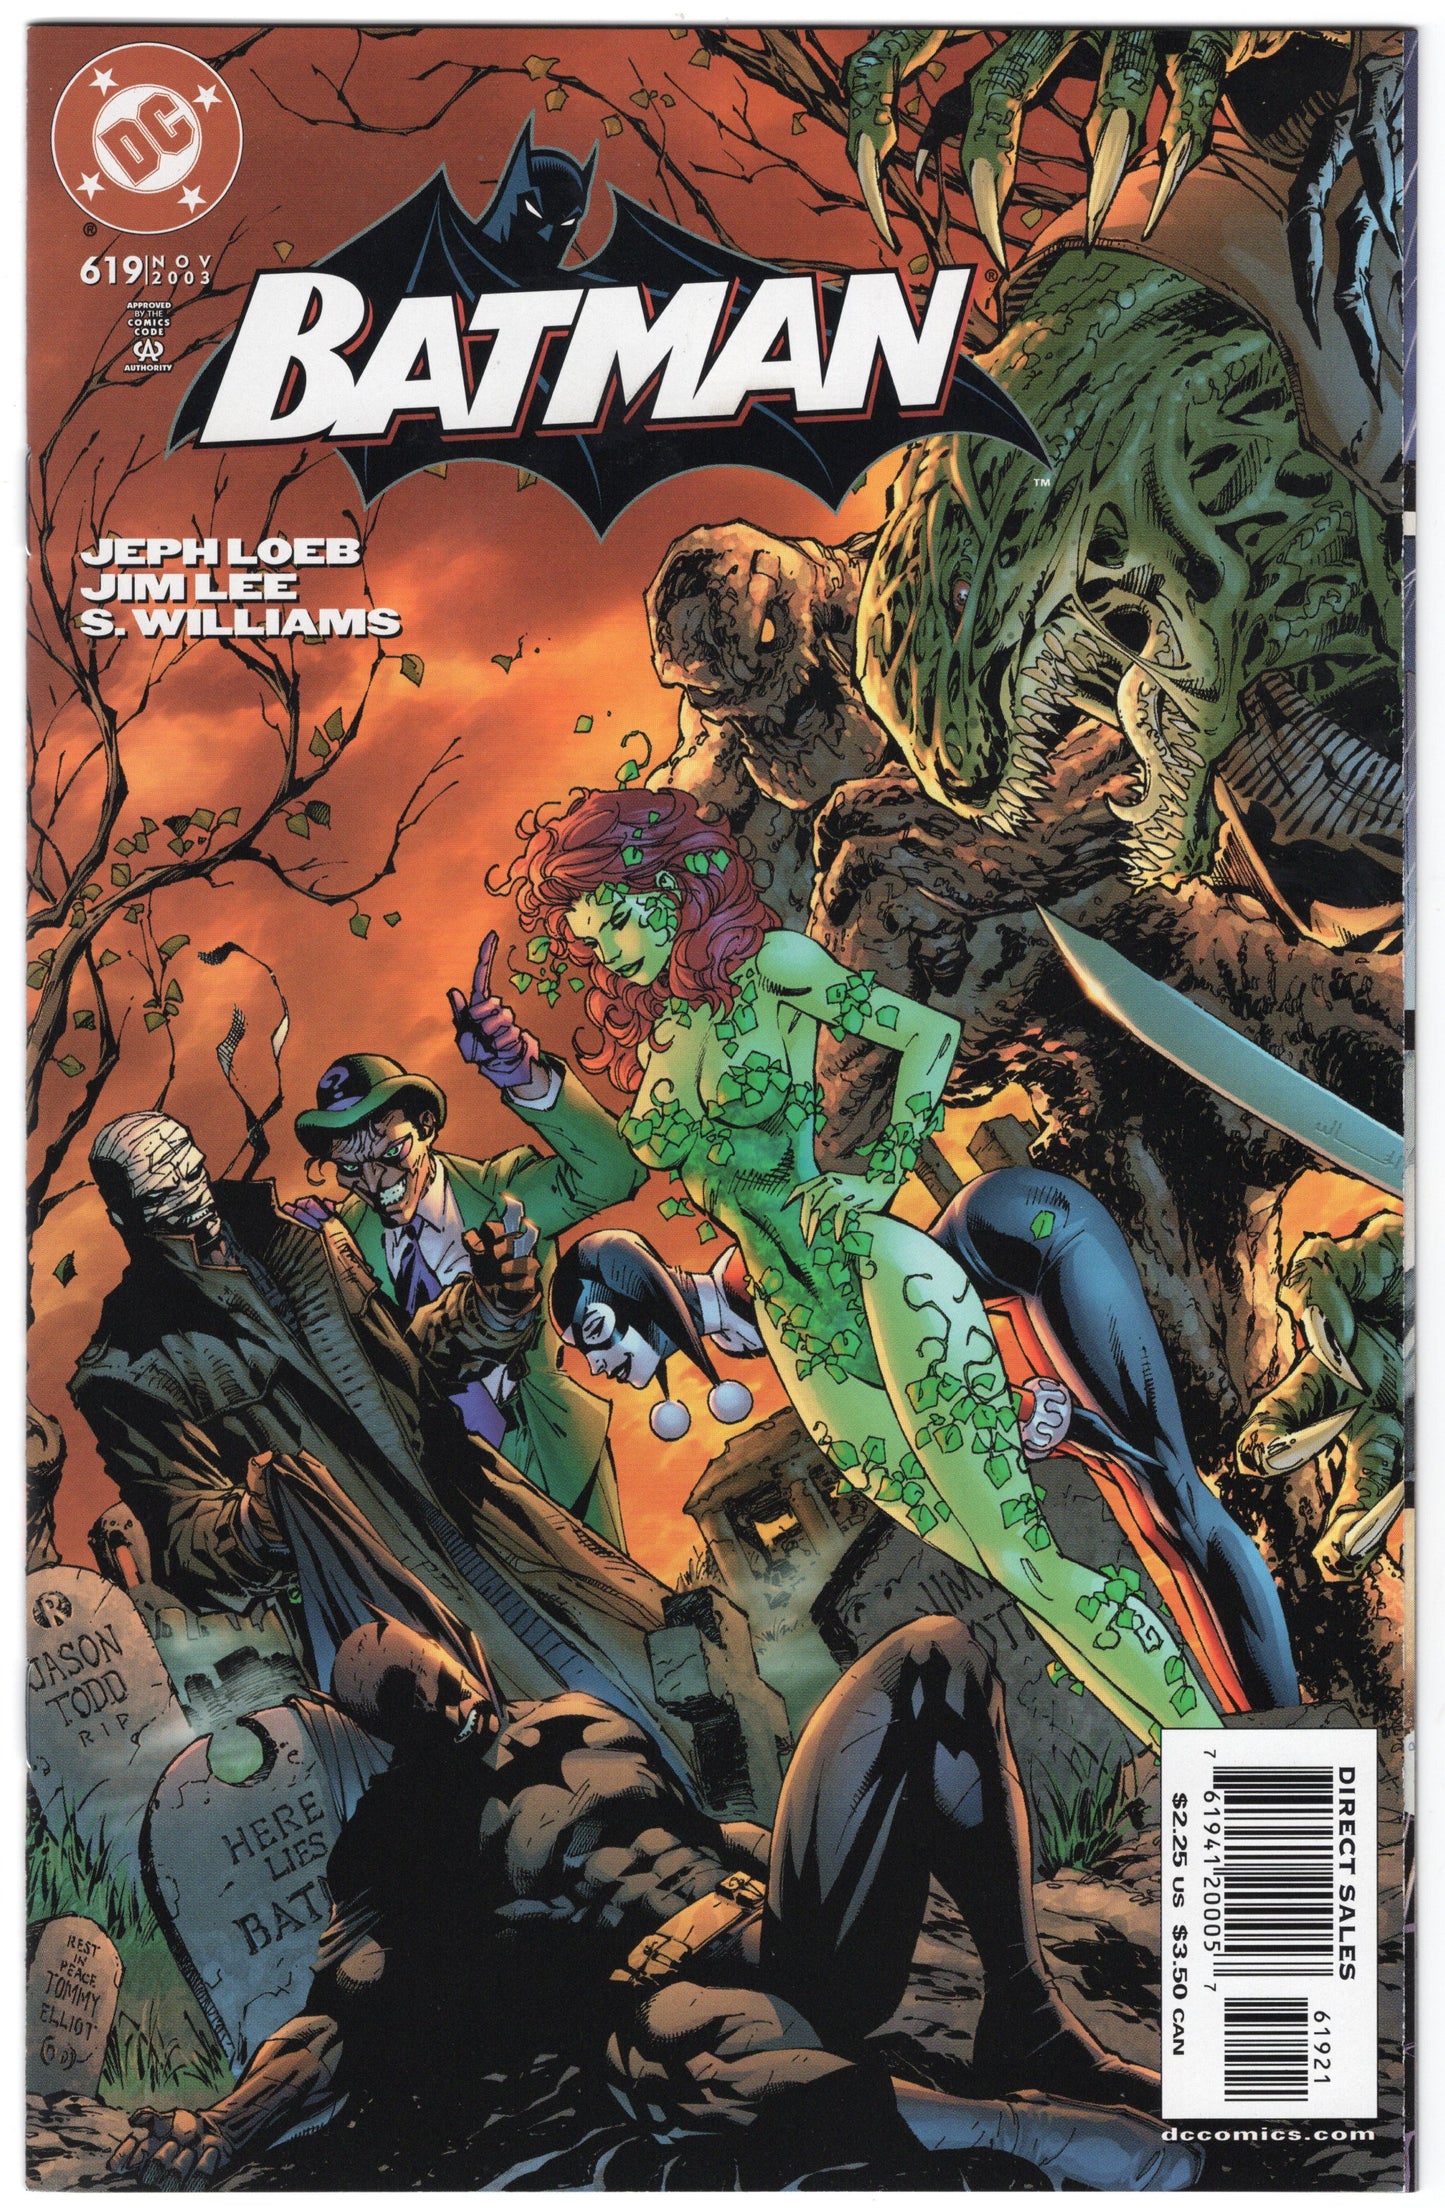 Batman - Issue #619 "Hush Storyline" (Nov. 2003 - DC Comics) NM